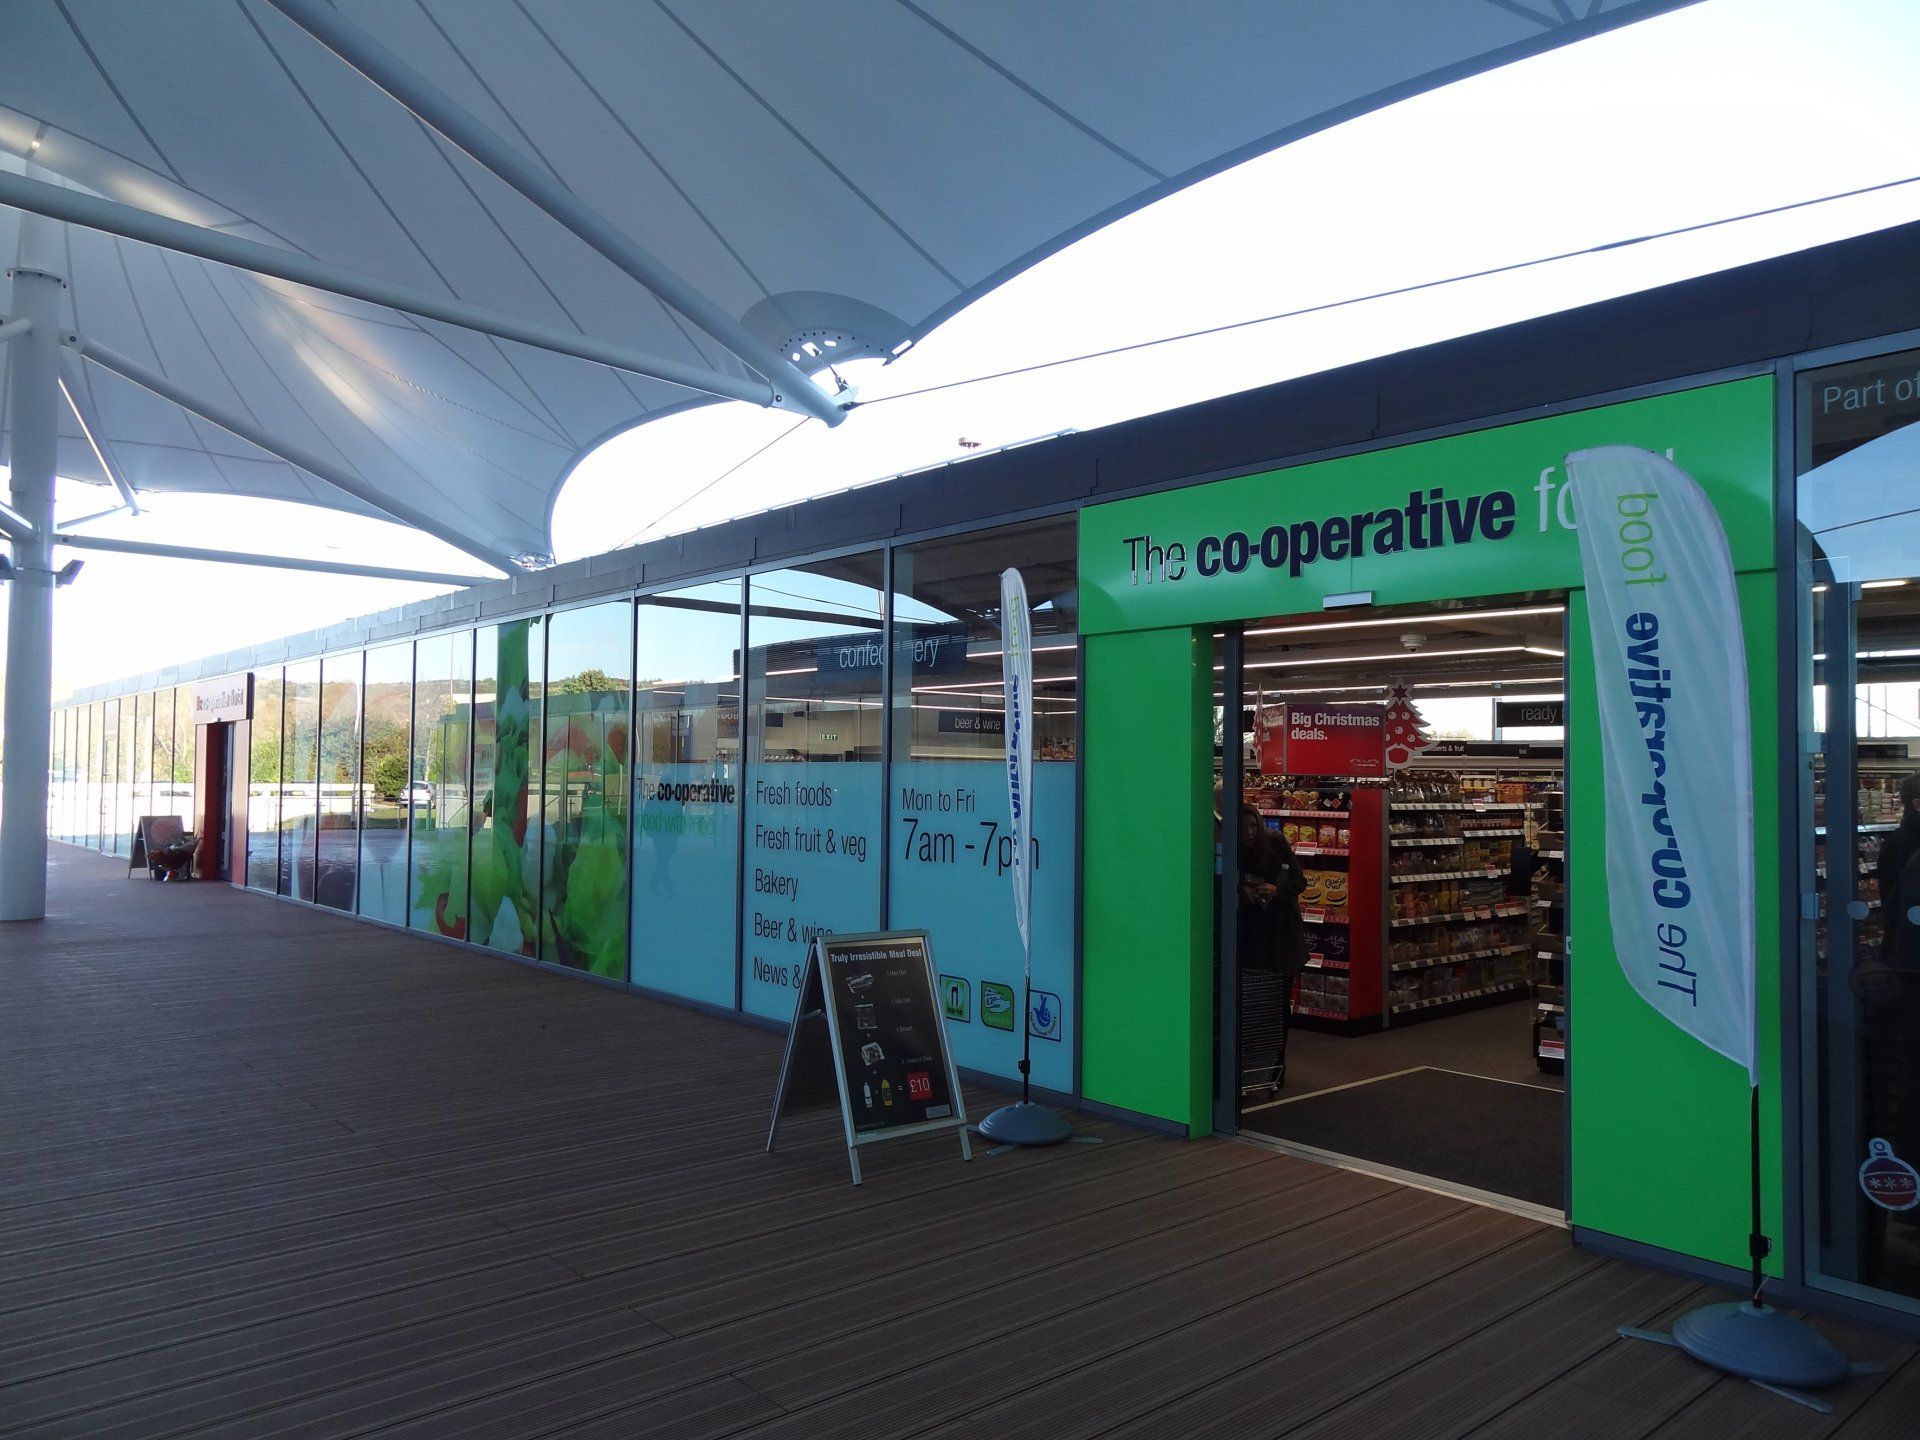 Cooperative Stores